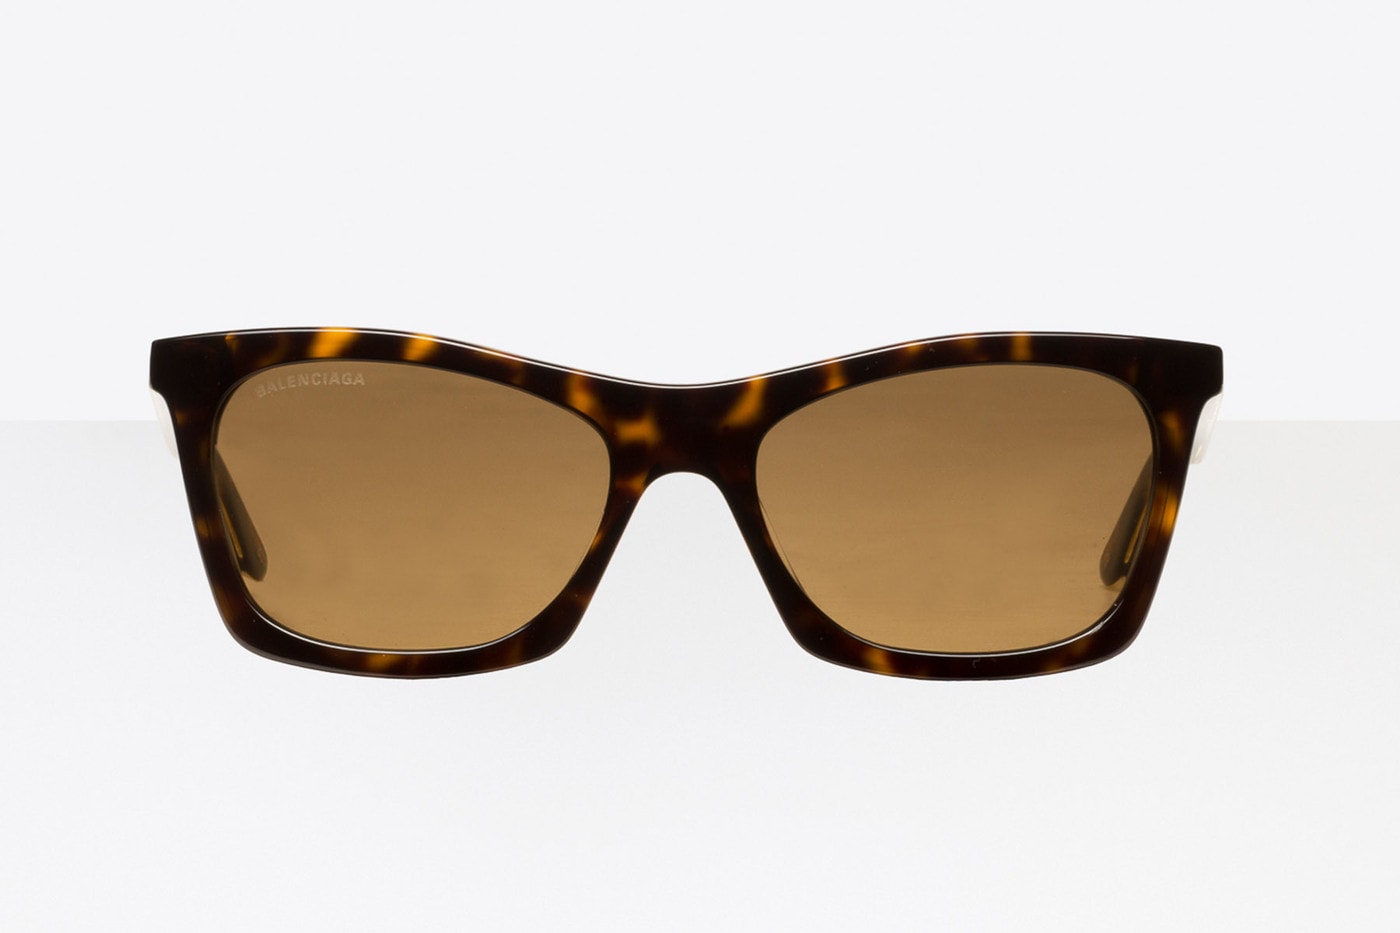 Balenciaga Demna Gvasalia Kering Eyewear Sunglasses Dover Street Market